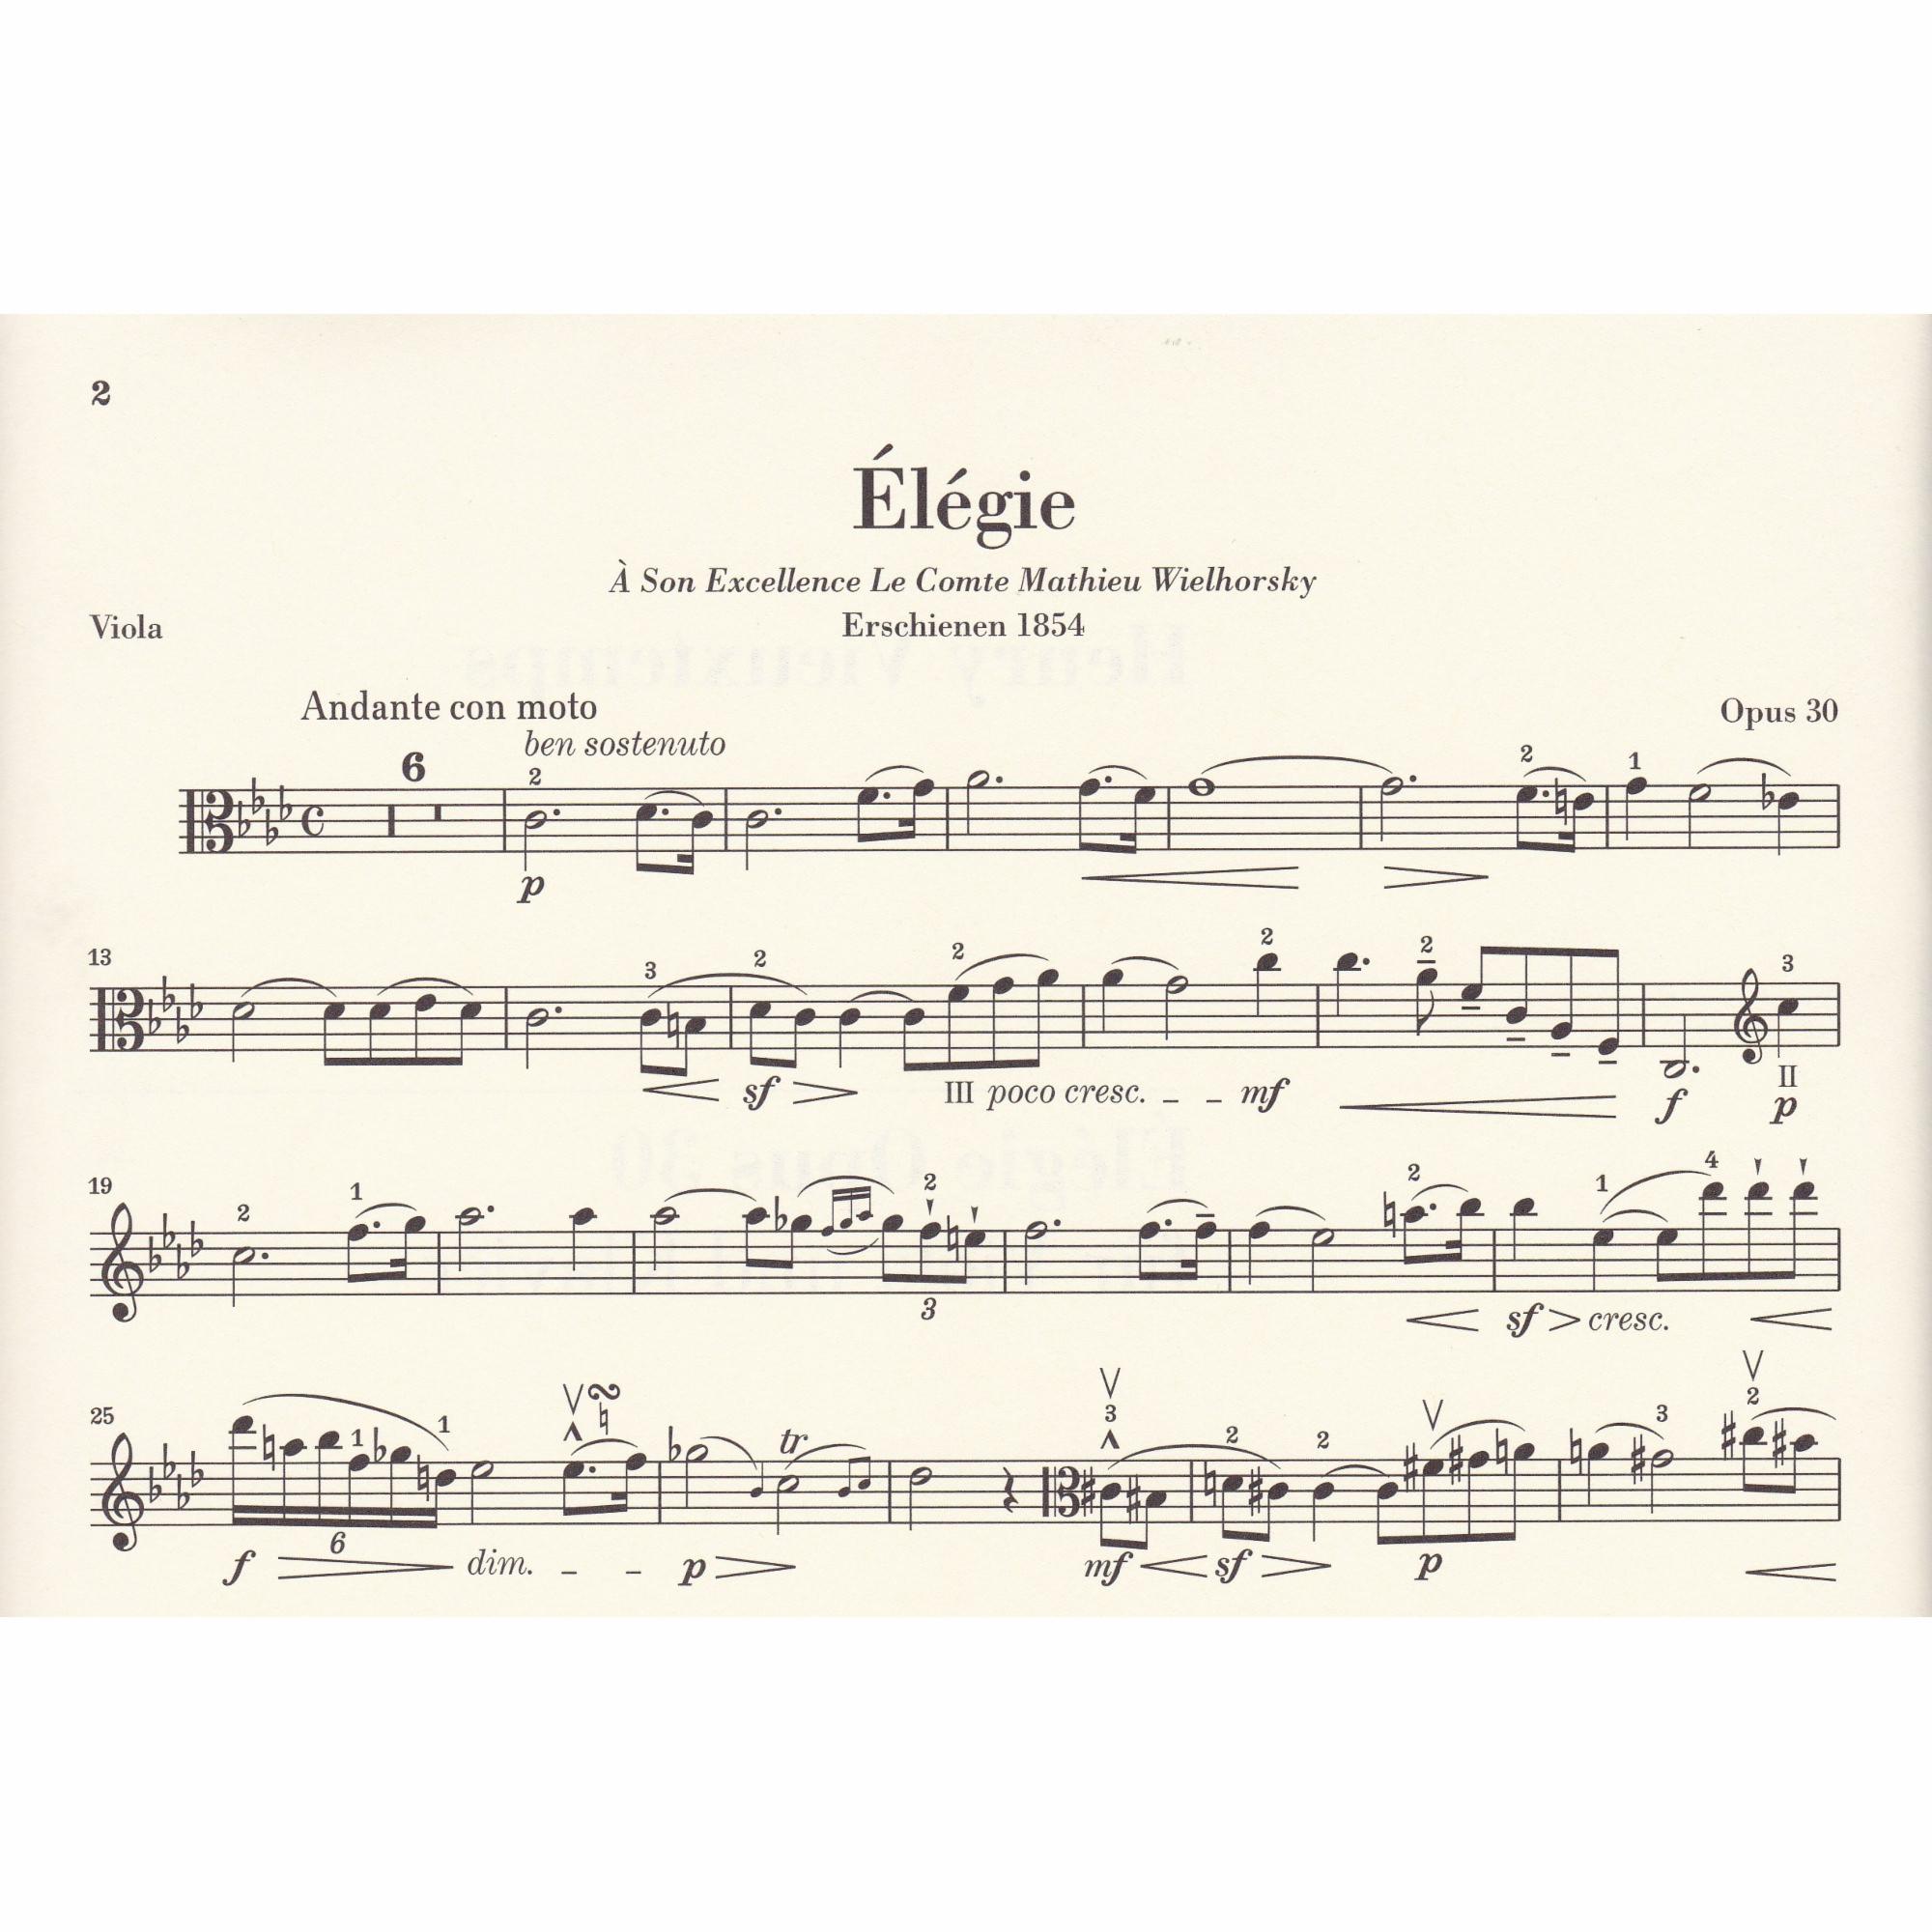 Elegie in F Minor for Viola and Piano, Op. 30